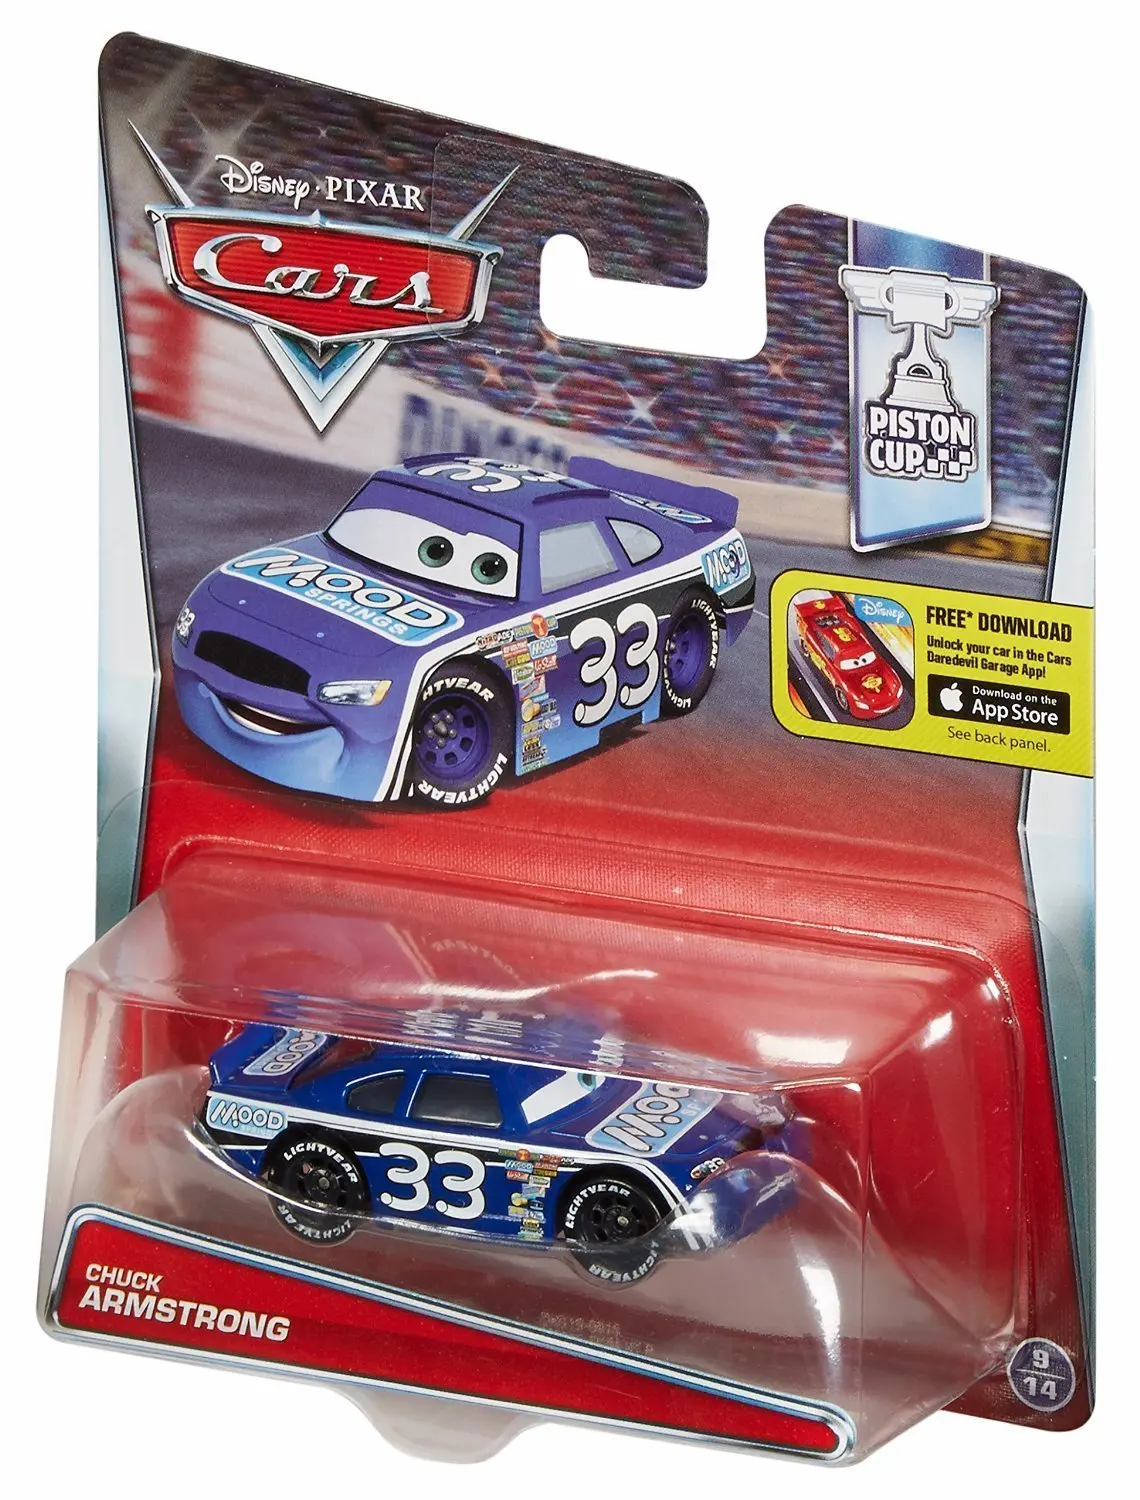 Buy Piston Cup Chuck Armstrong Mood Springs Disney Pixar Cars 1:55 ...